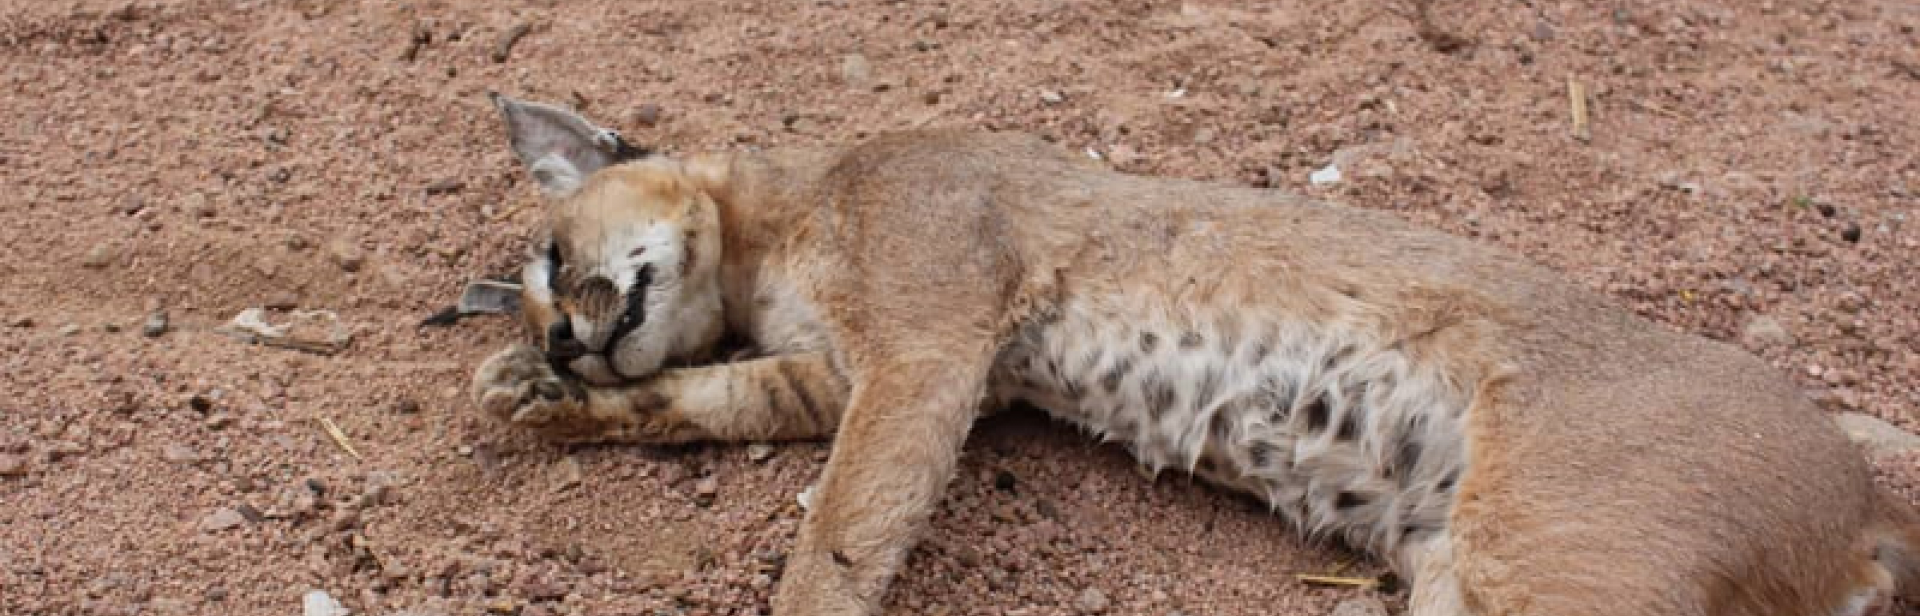 An Arab Lynx, an endangered species, killed July 2020. Credit: Holm Akhdar